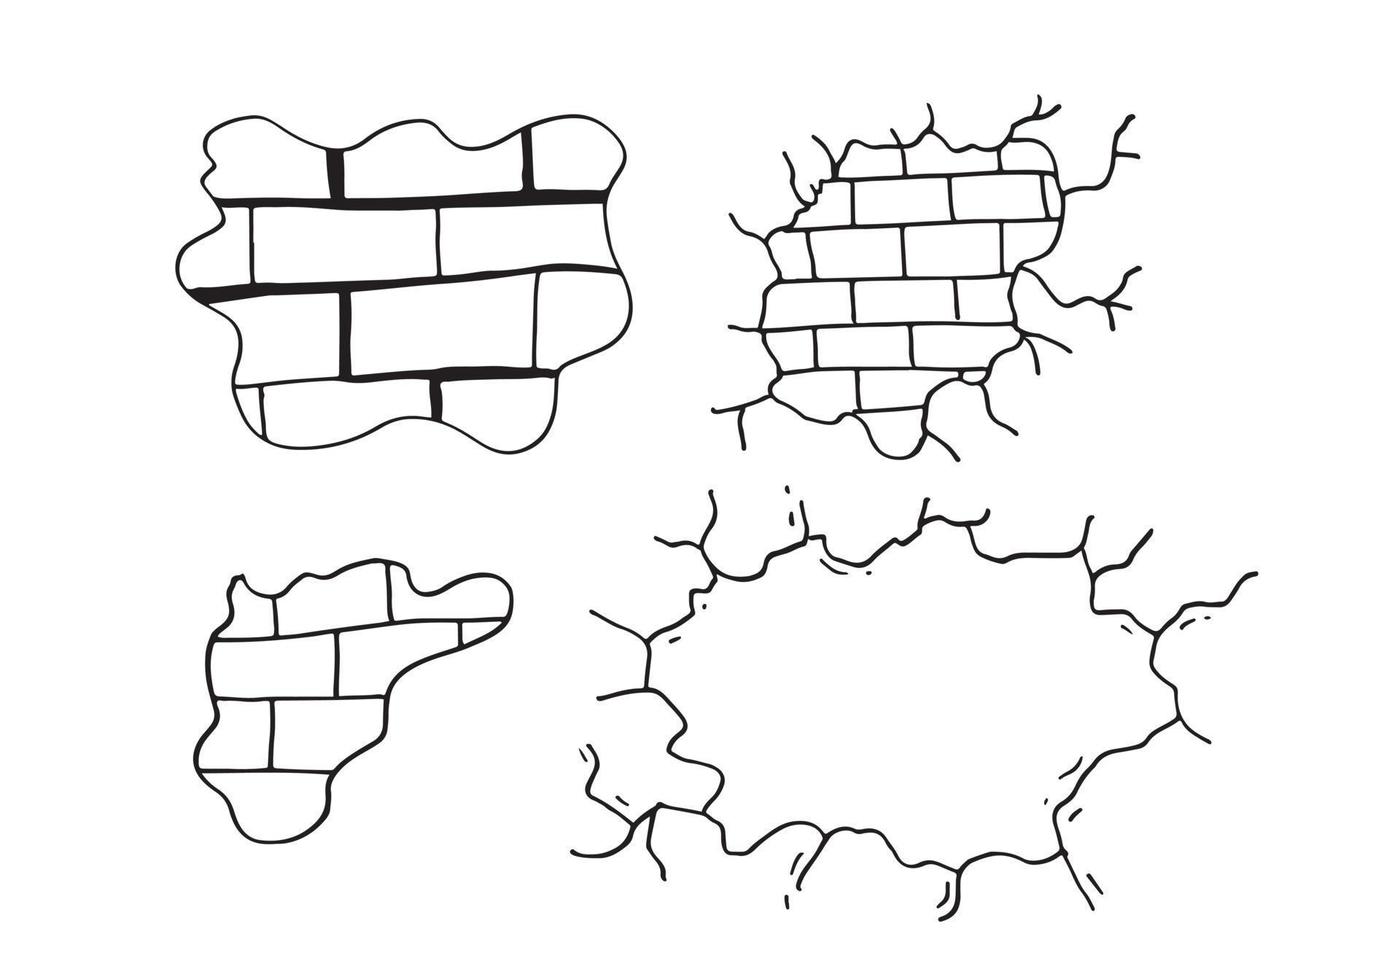 Hand-drawn set of cracked brick walls. Vector illustration.